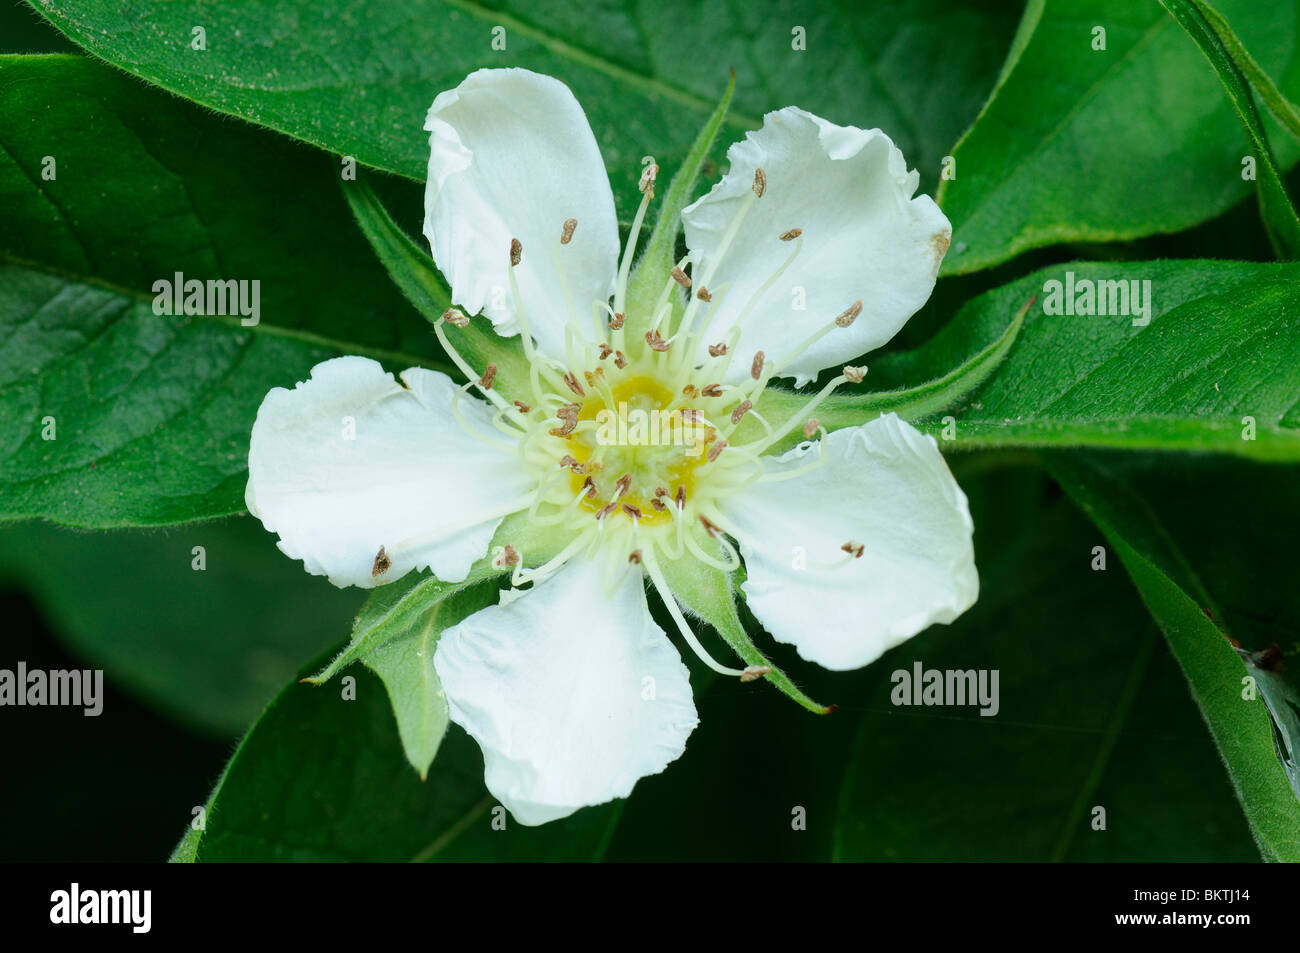 Bloem van de Mispel; Flower of the Common Medlar Stock Photo